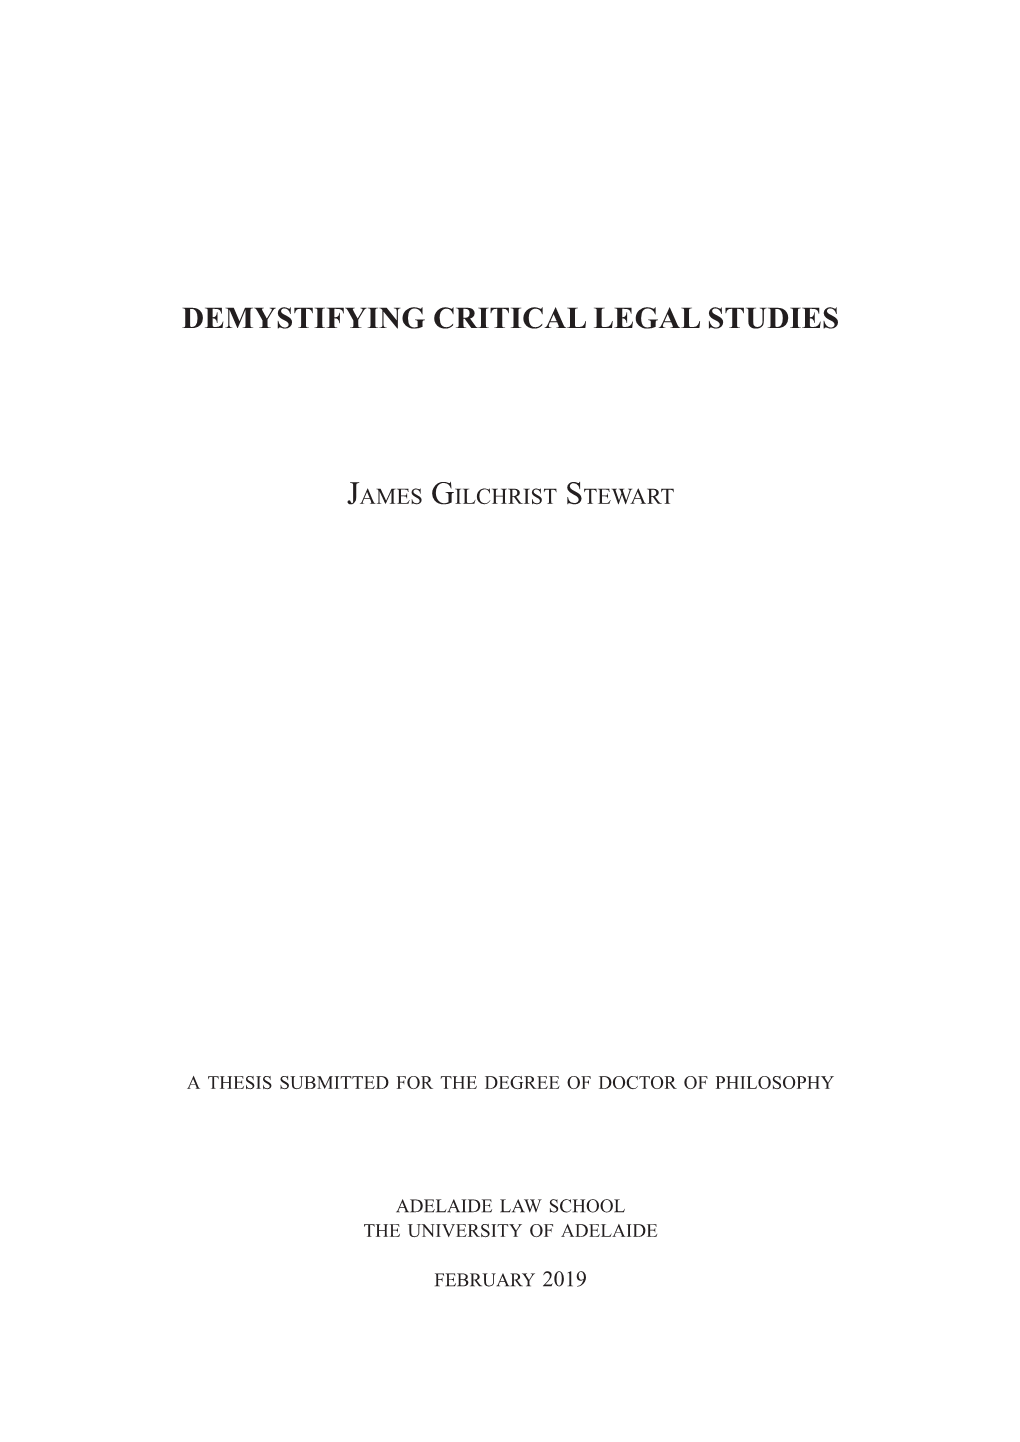 Demystifying Critical Legal Studies